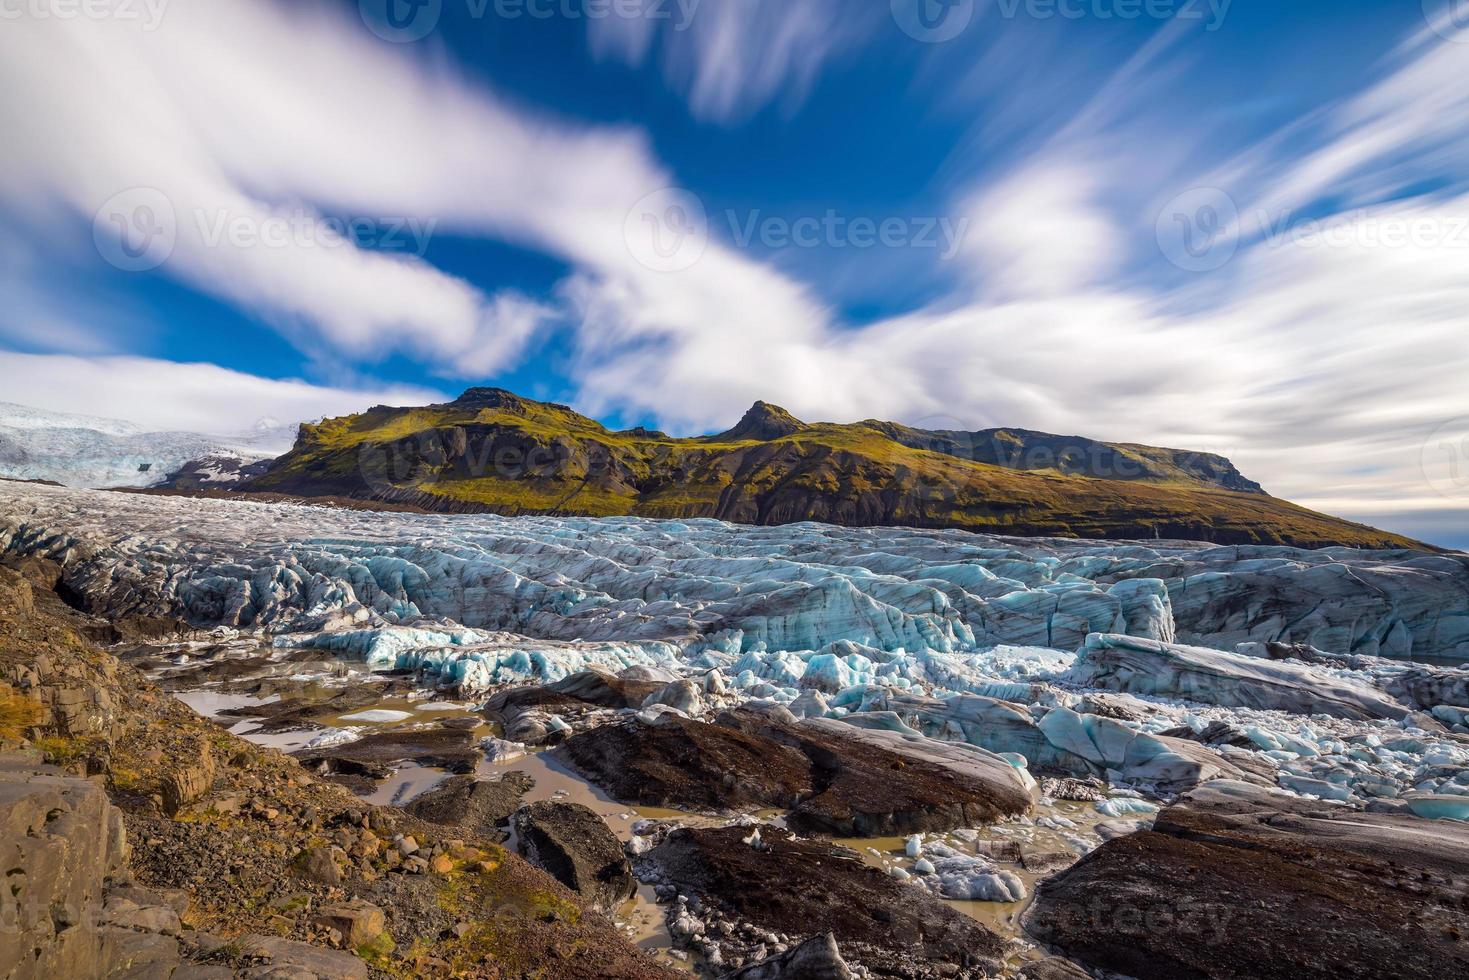 ghiacciaio svinafellsjokull nel parco nazionale di vatnajokull foto